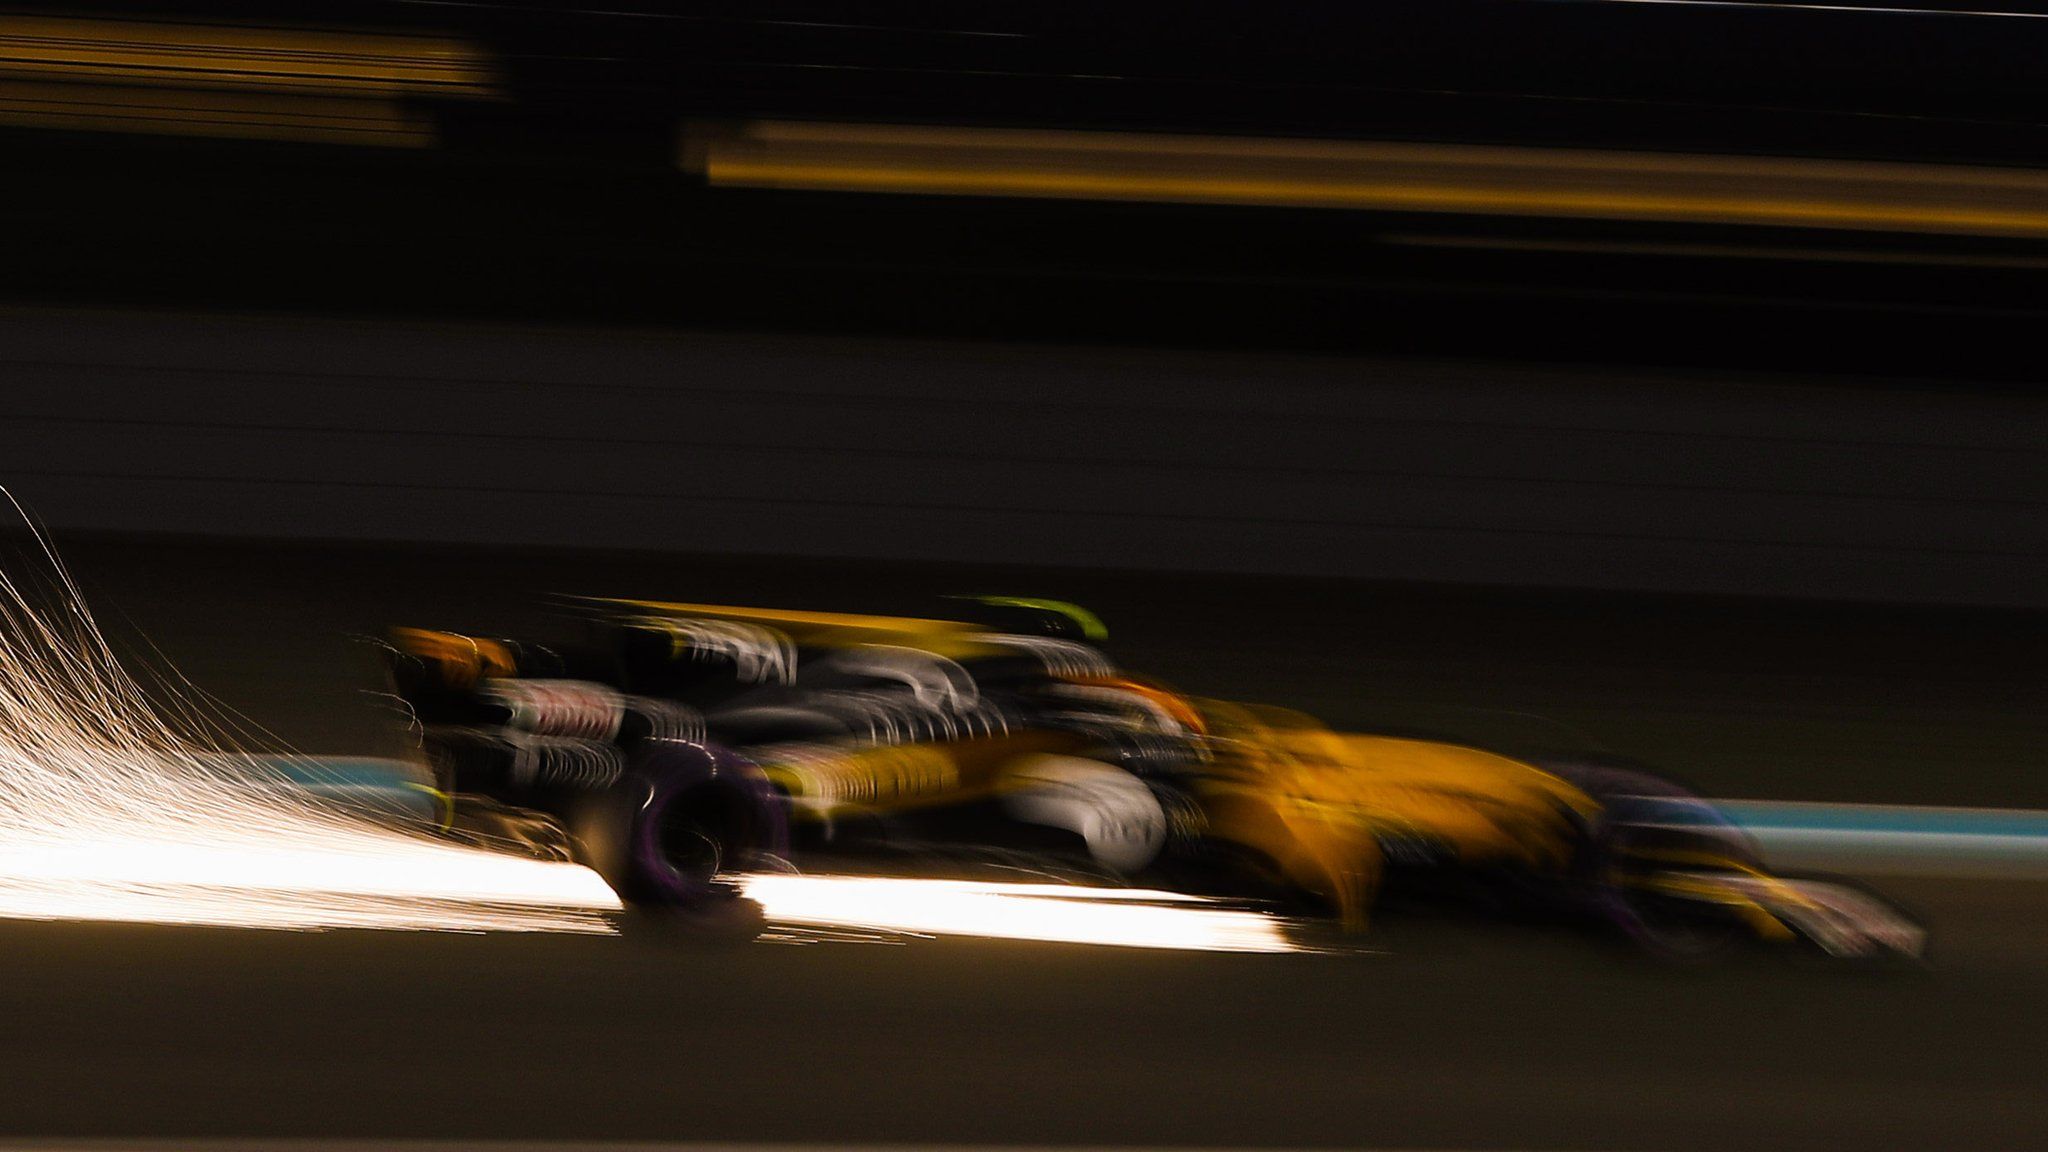 Carlos Sainz in action at the Abu Dhabi Grand Prix